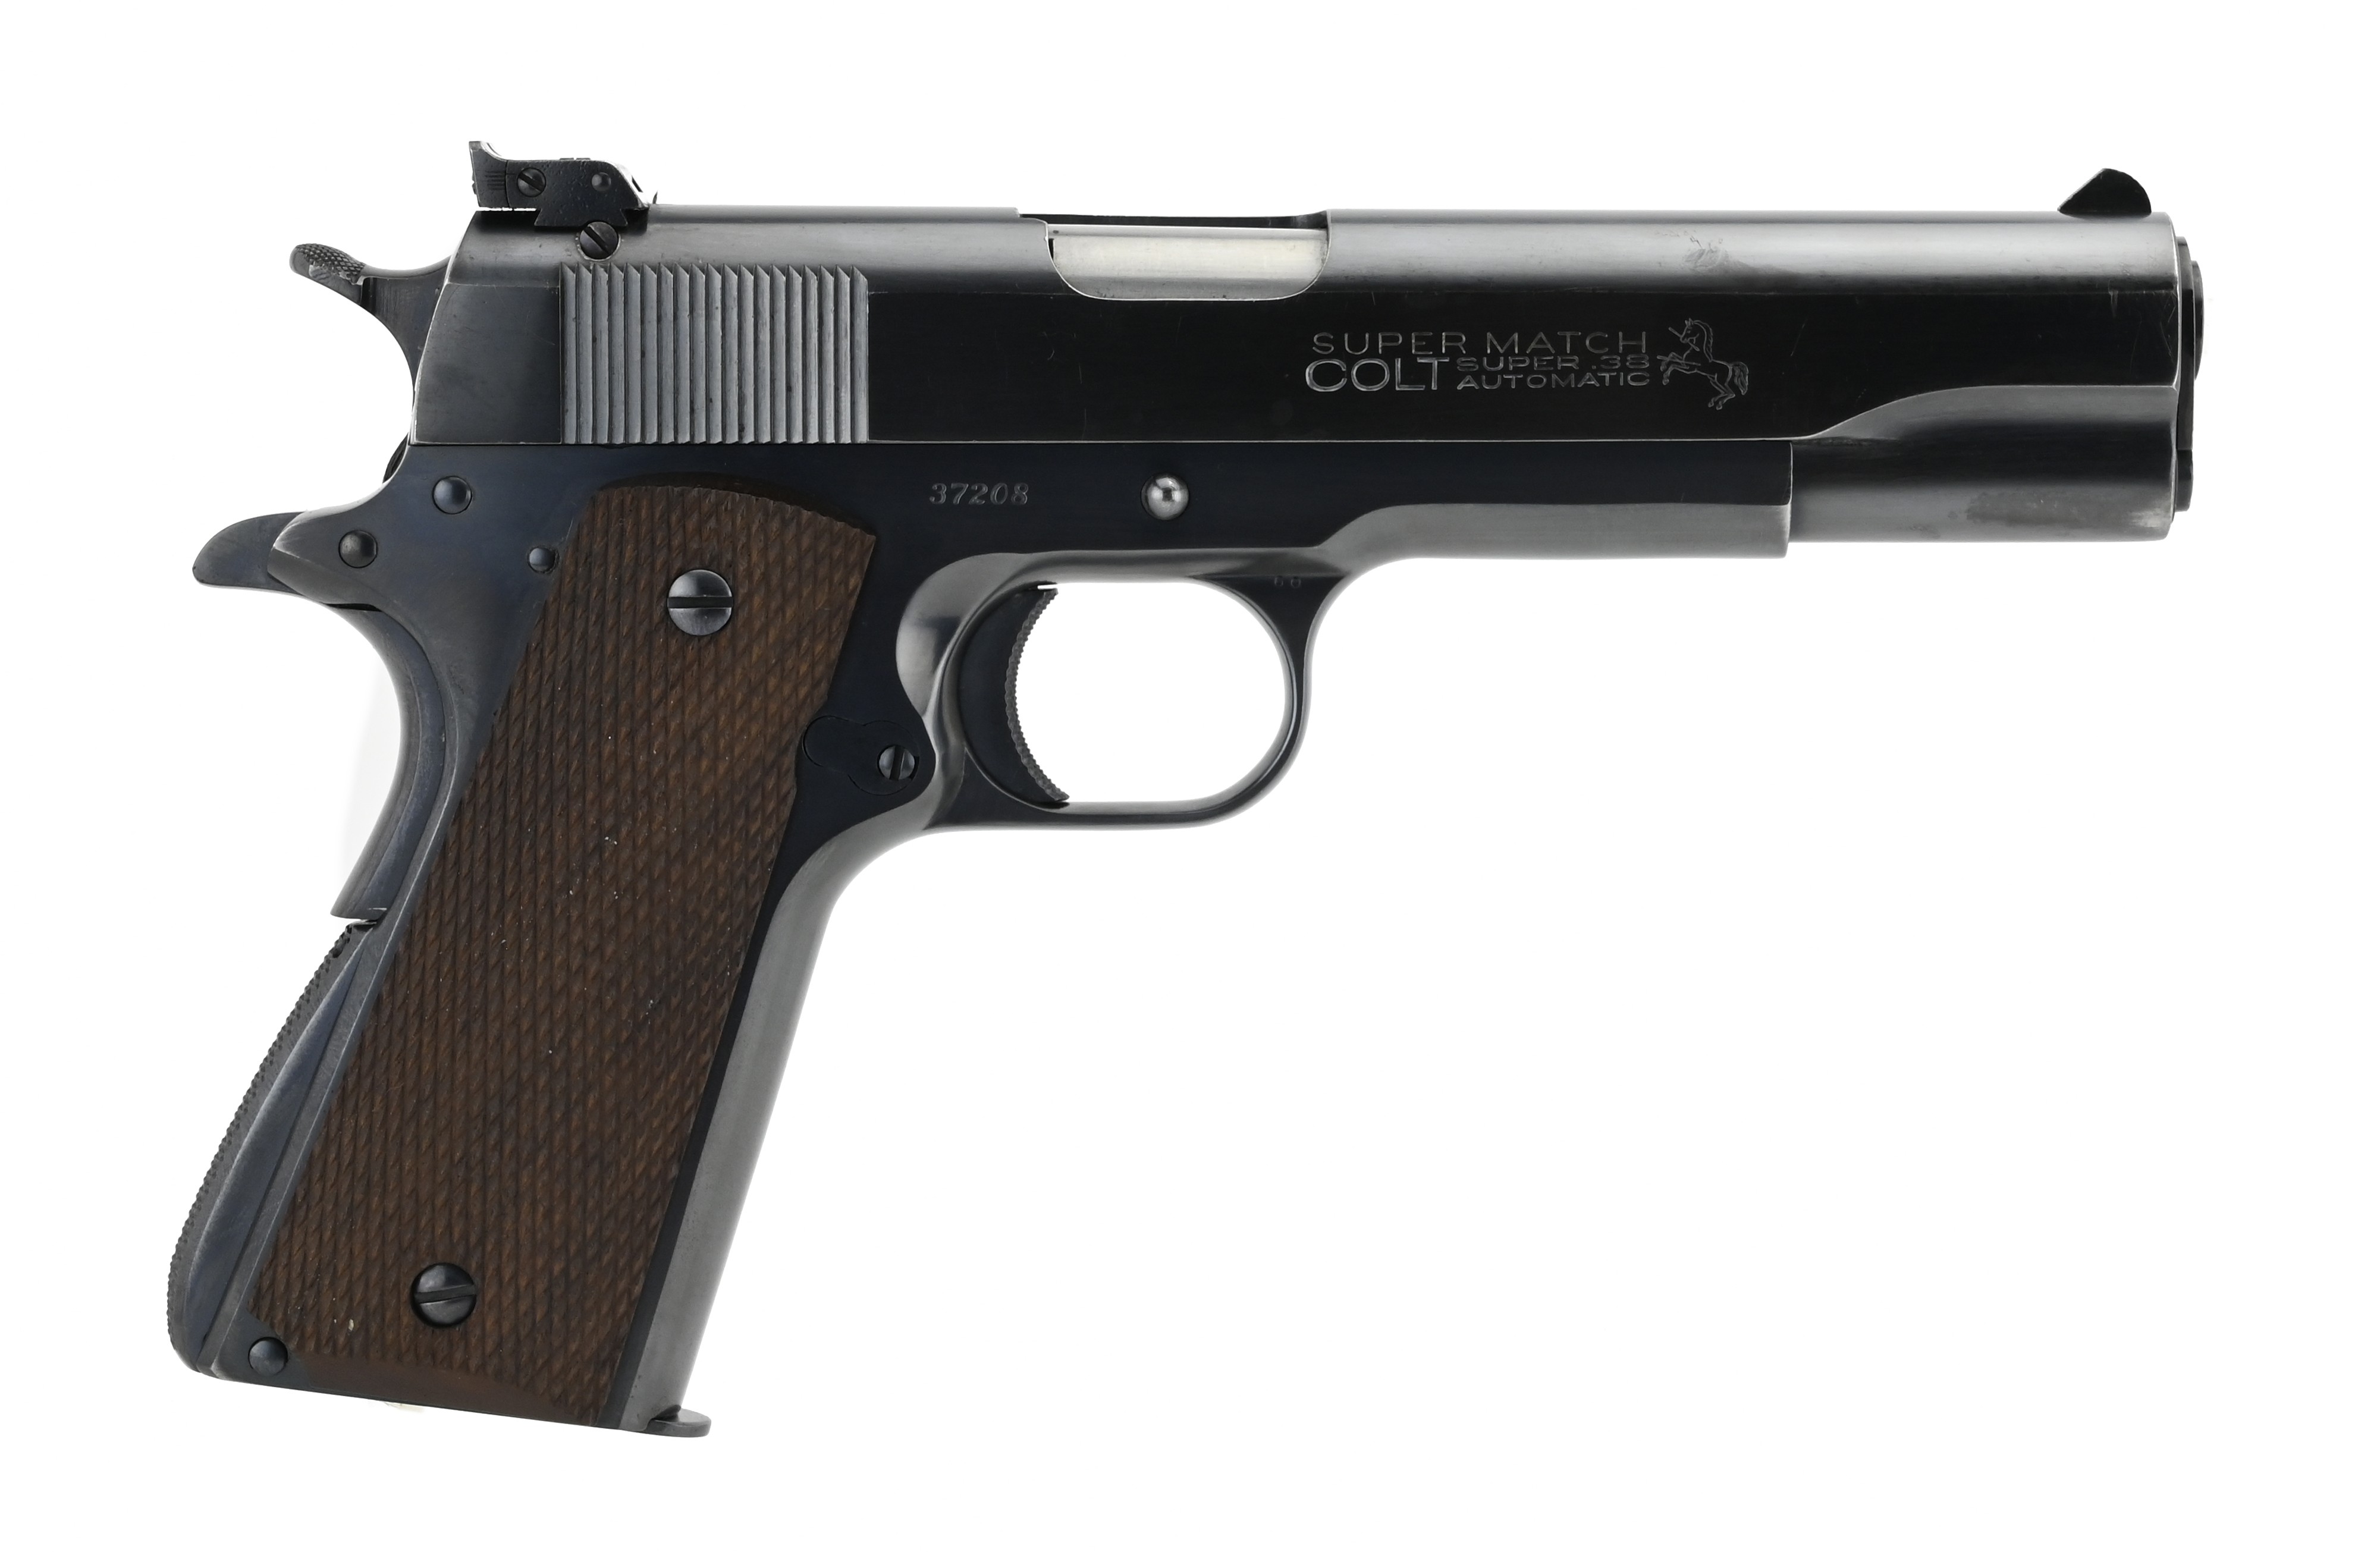 Colt “Super Match” .38 Super caliber pistol for sale.